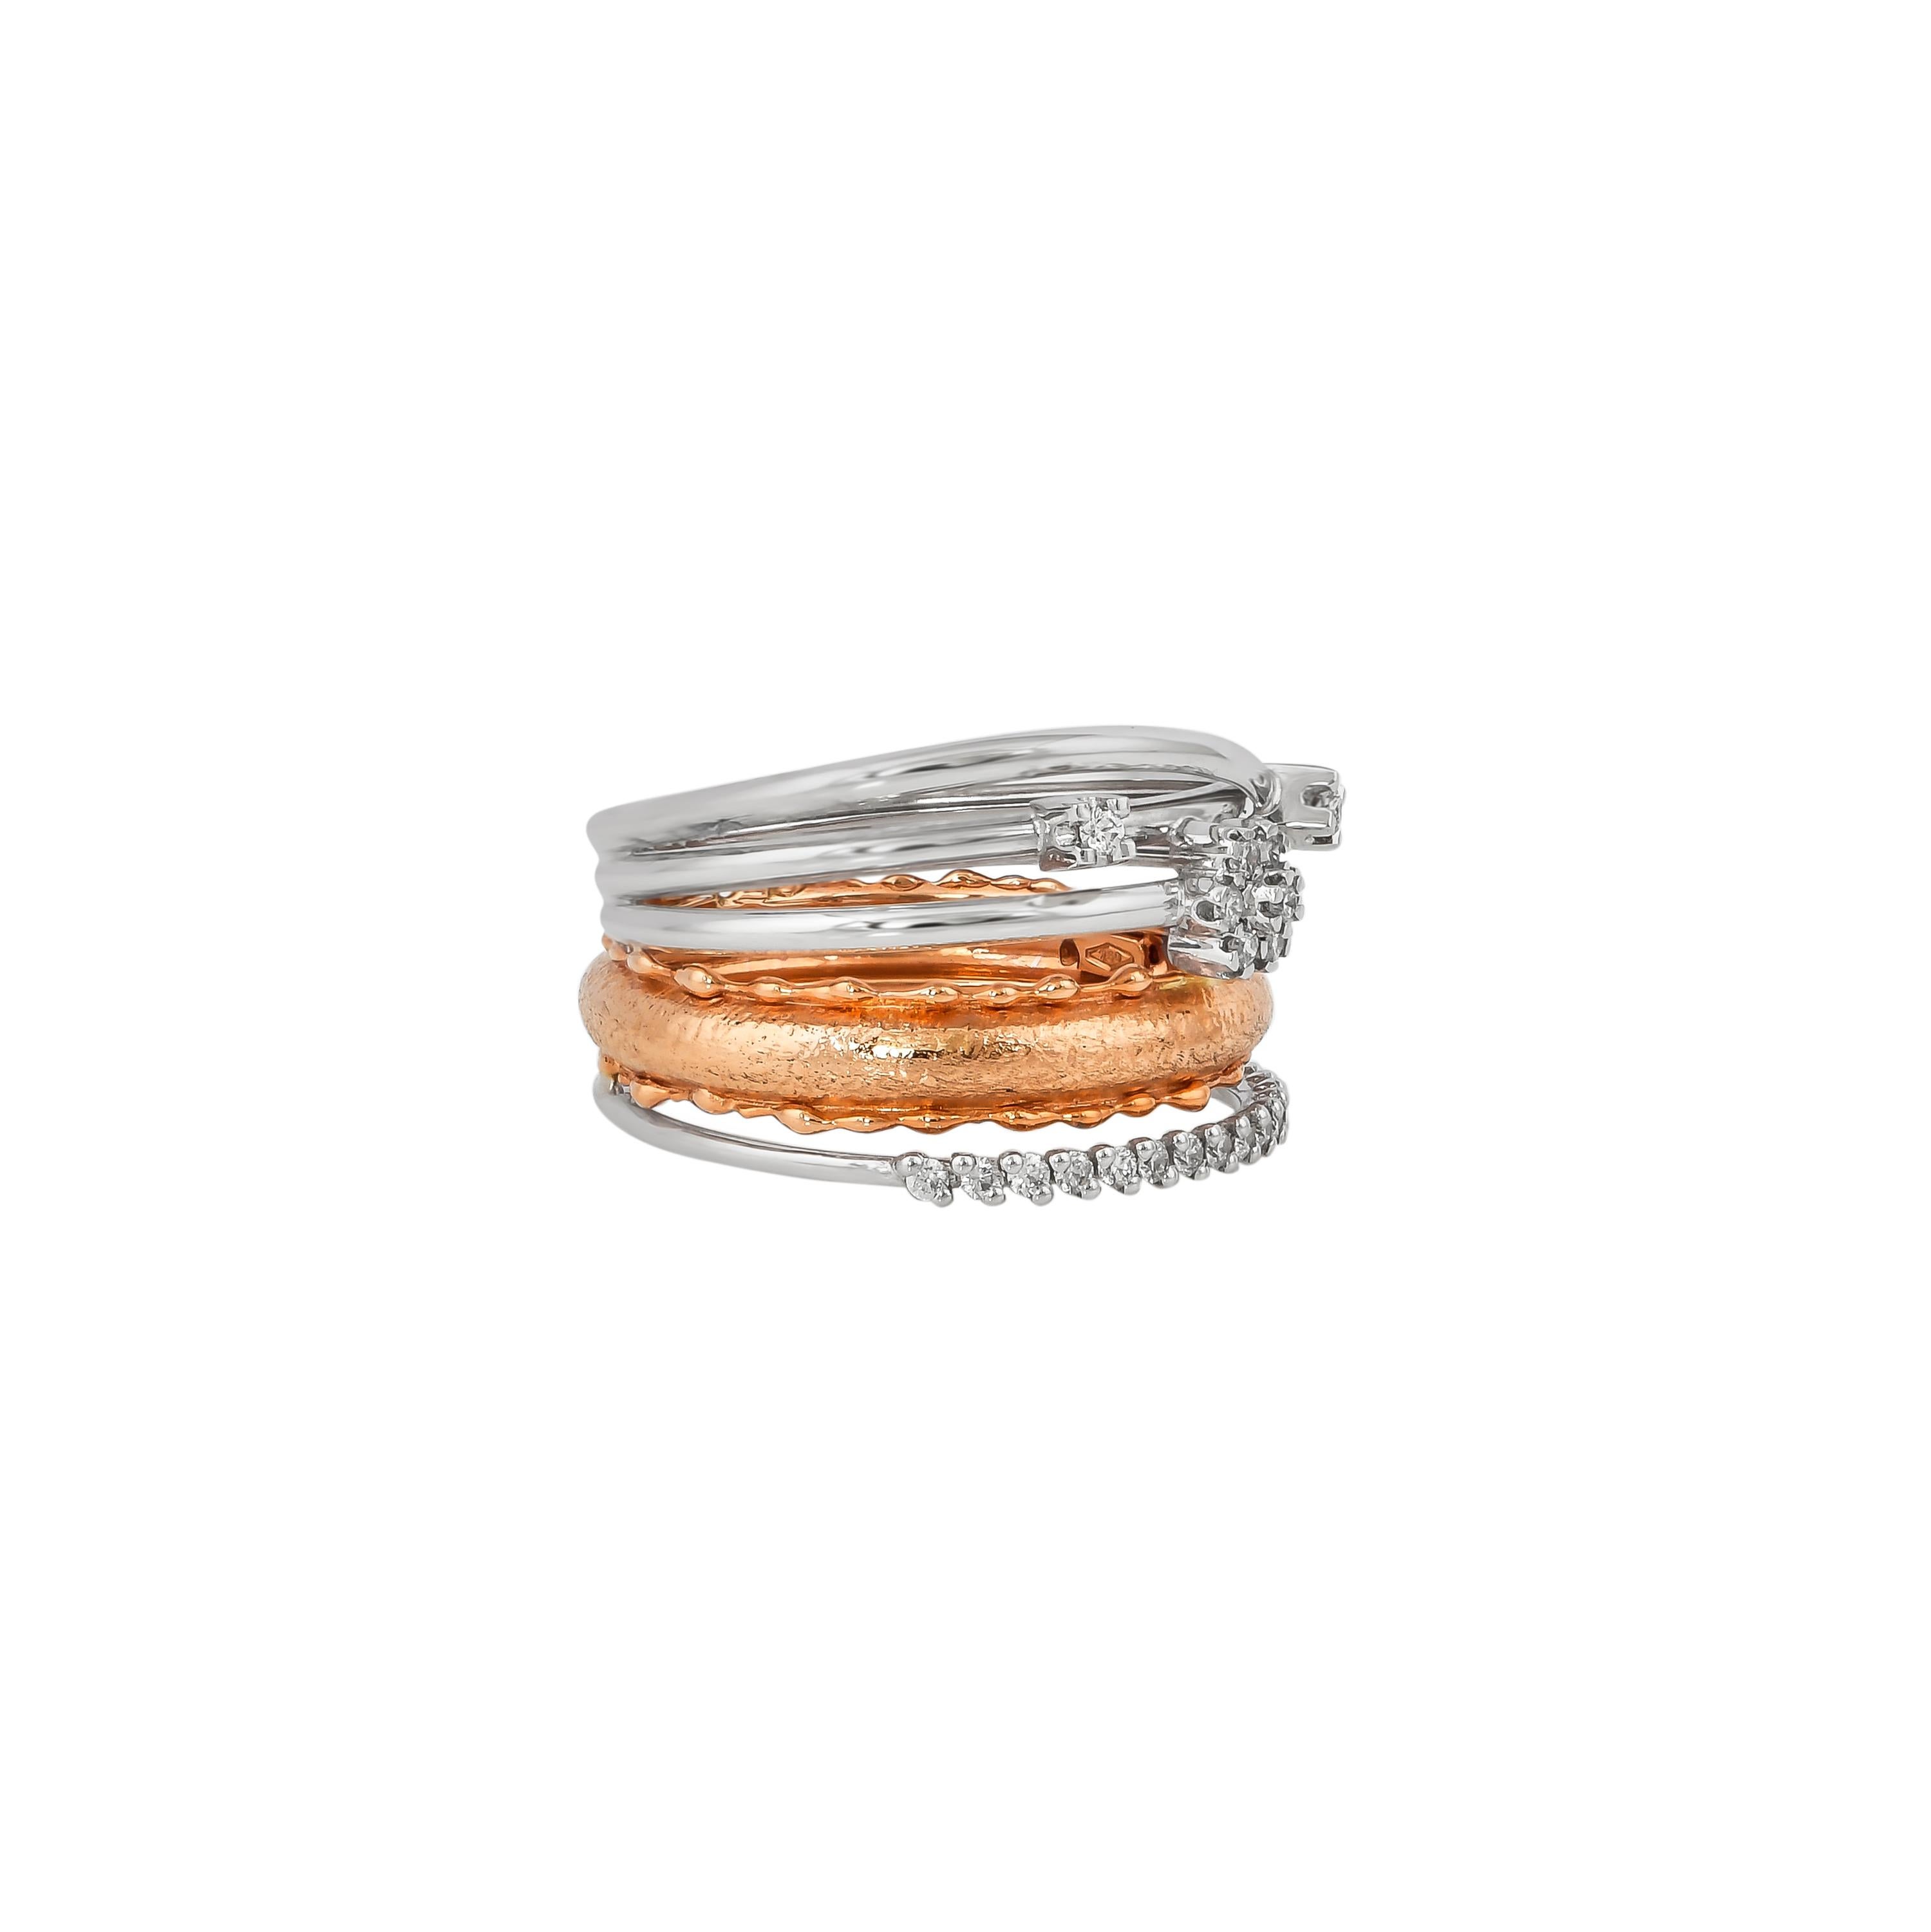 Unique and Designer Cocktail Rings by Sunita Nahata Fine Design.

Classic Diamond ring in 18K White & Rose gold. 

Diamond: 0.022 carat, 1.45mm size, round shape, G colour, VS clarity.
Diamond: 0.176 carat, 1.25mm size, round shape, G colour, VS